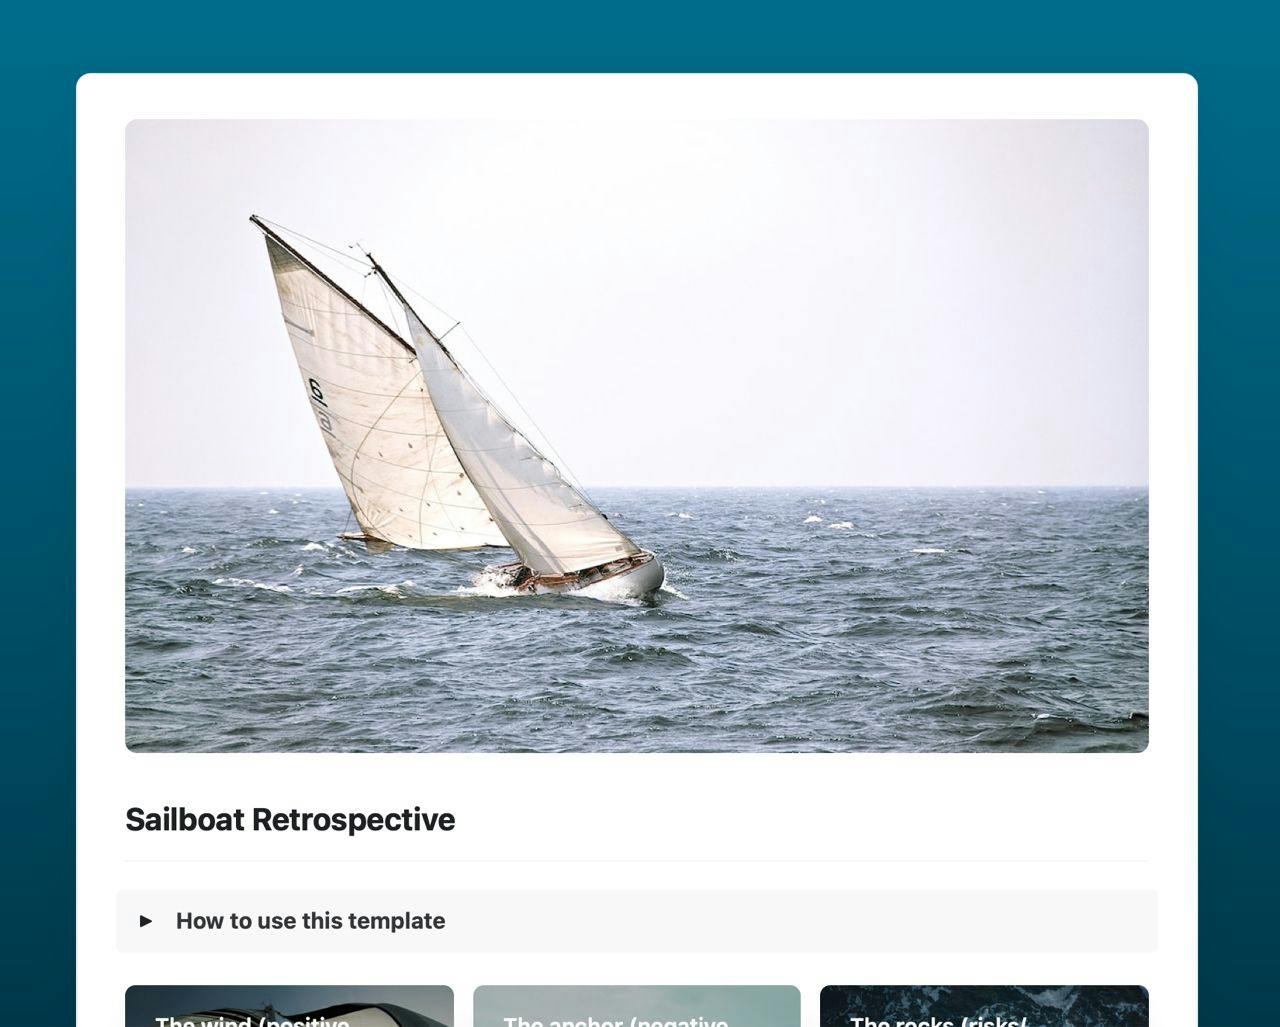 Sailboat retrospective template built using Craft